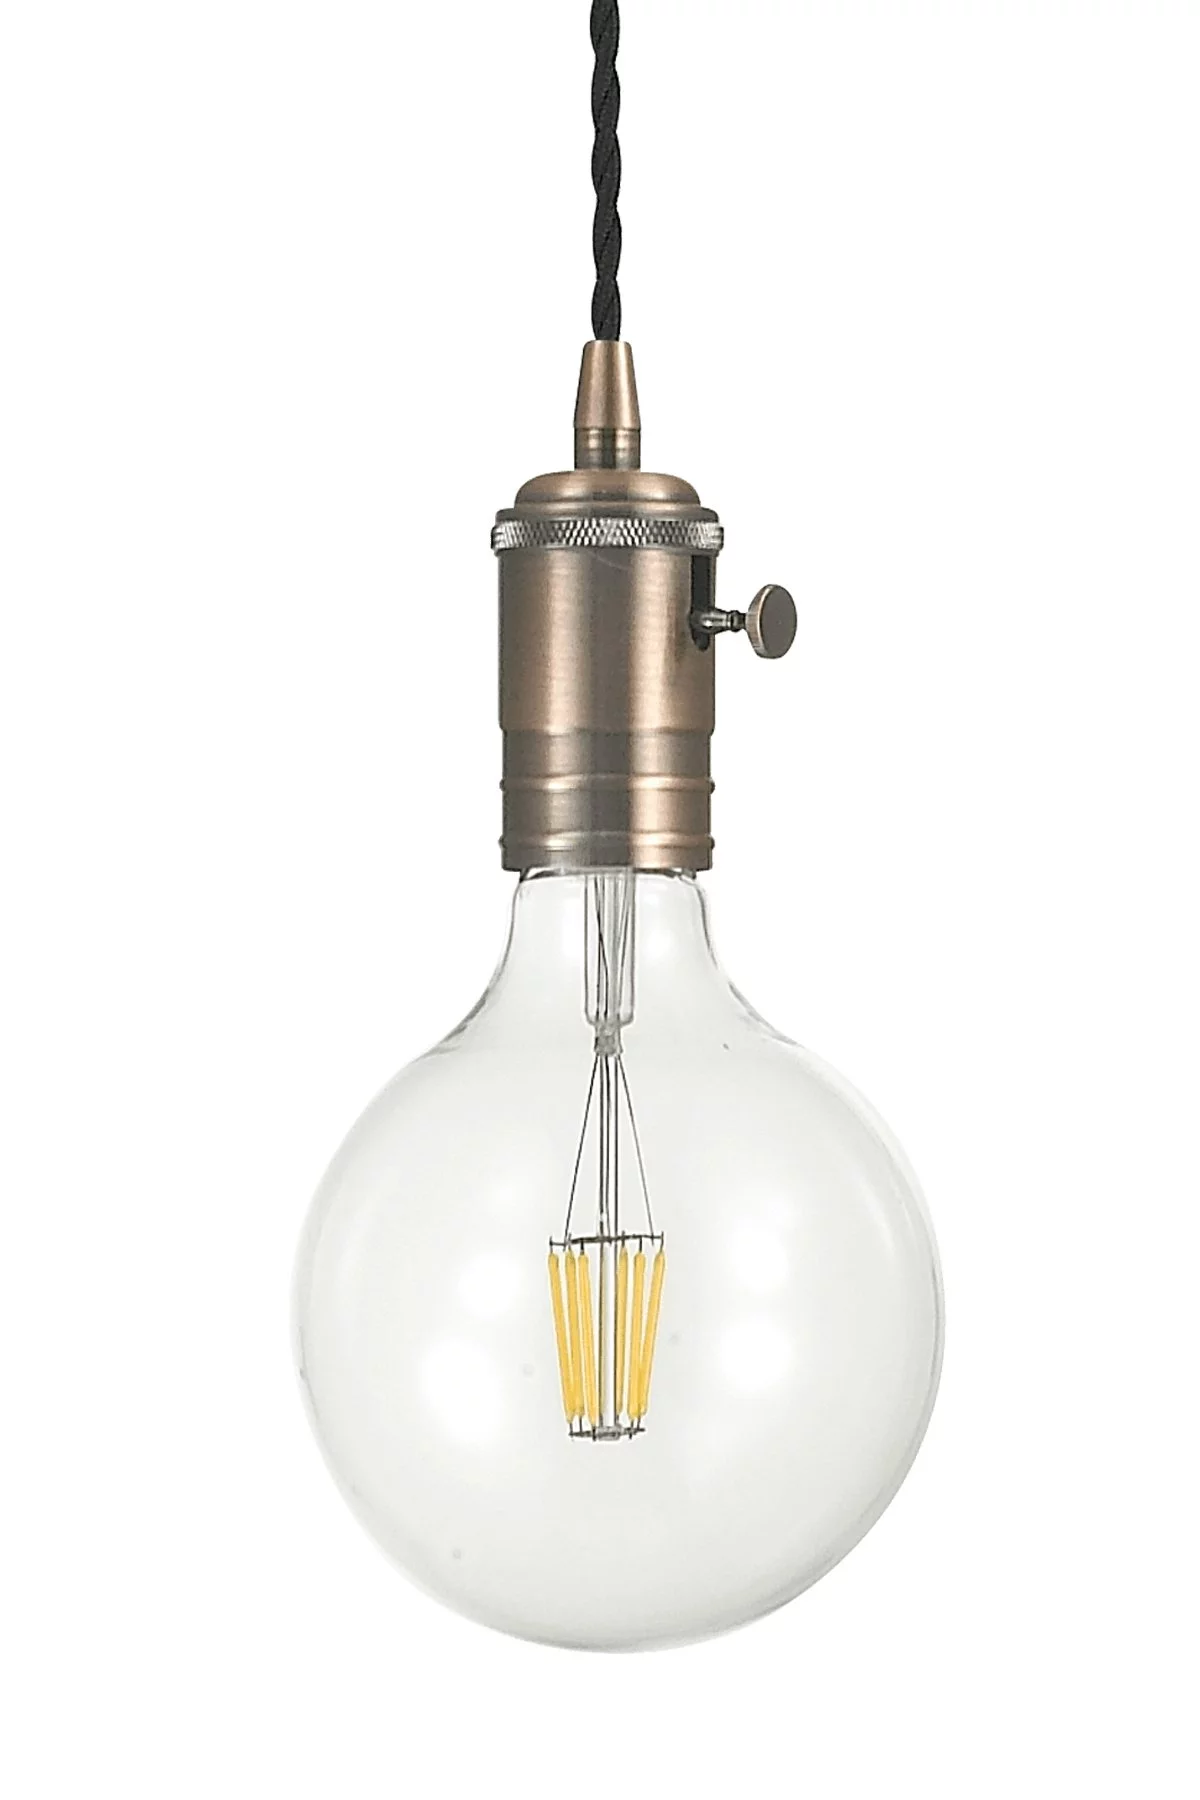   
                        
                        Люстра IDEAL LUX (Италия) 22940    
                         в стиле Модерн.  
                        Тип источника света: светодиодная лампа, сменная.                         Форма: Круг.                                                                          фото 1